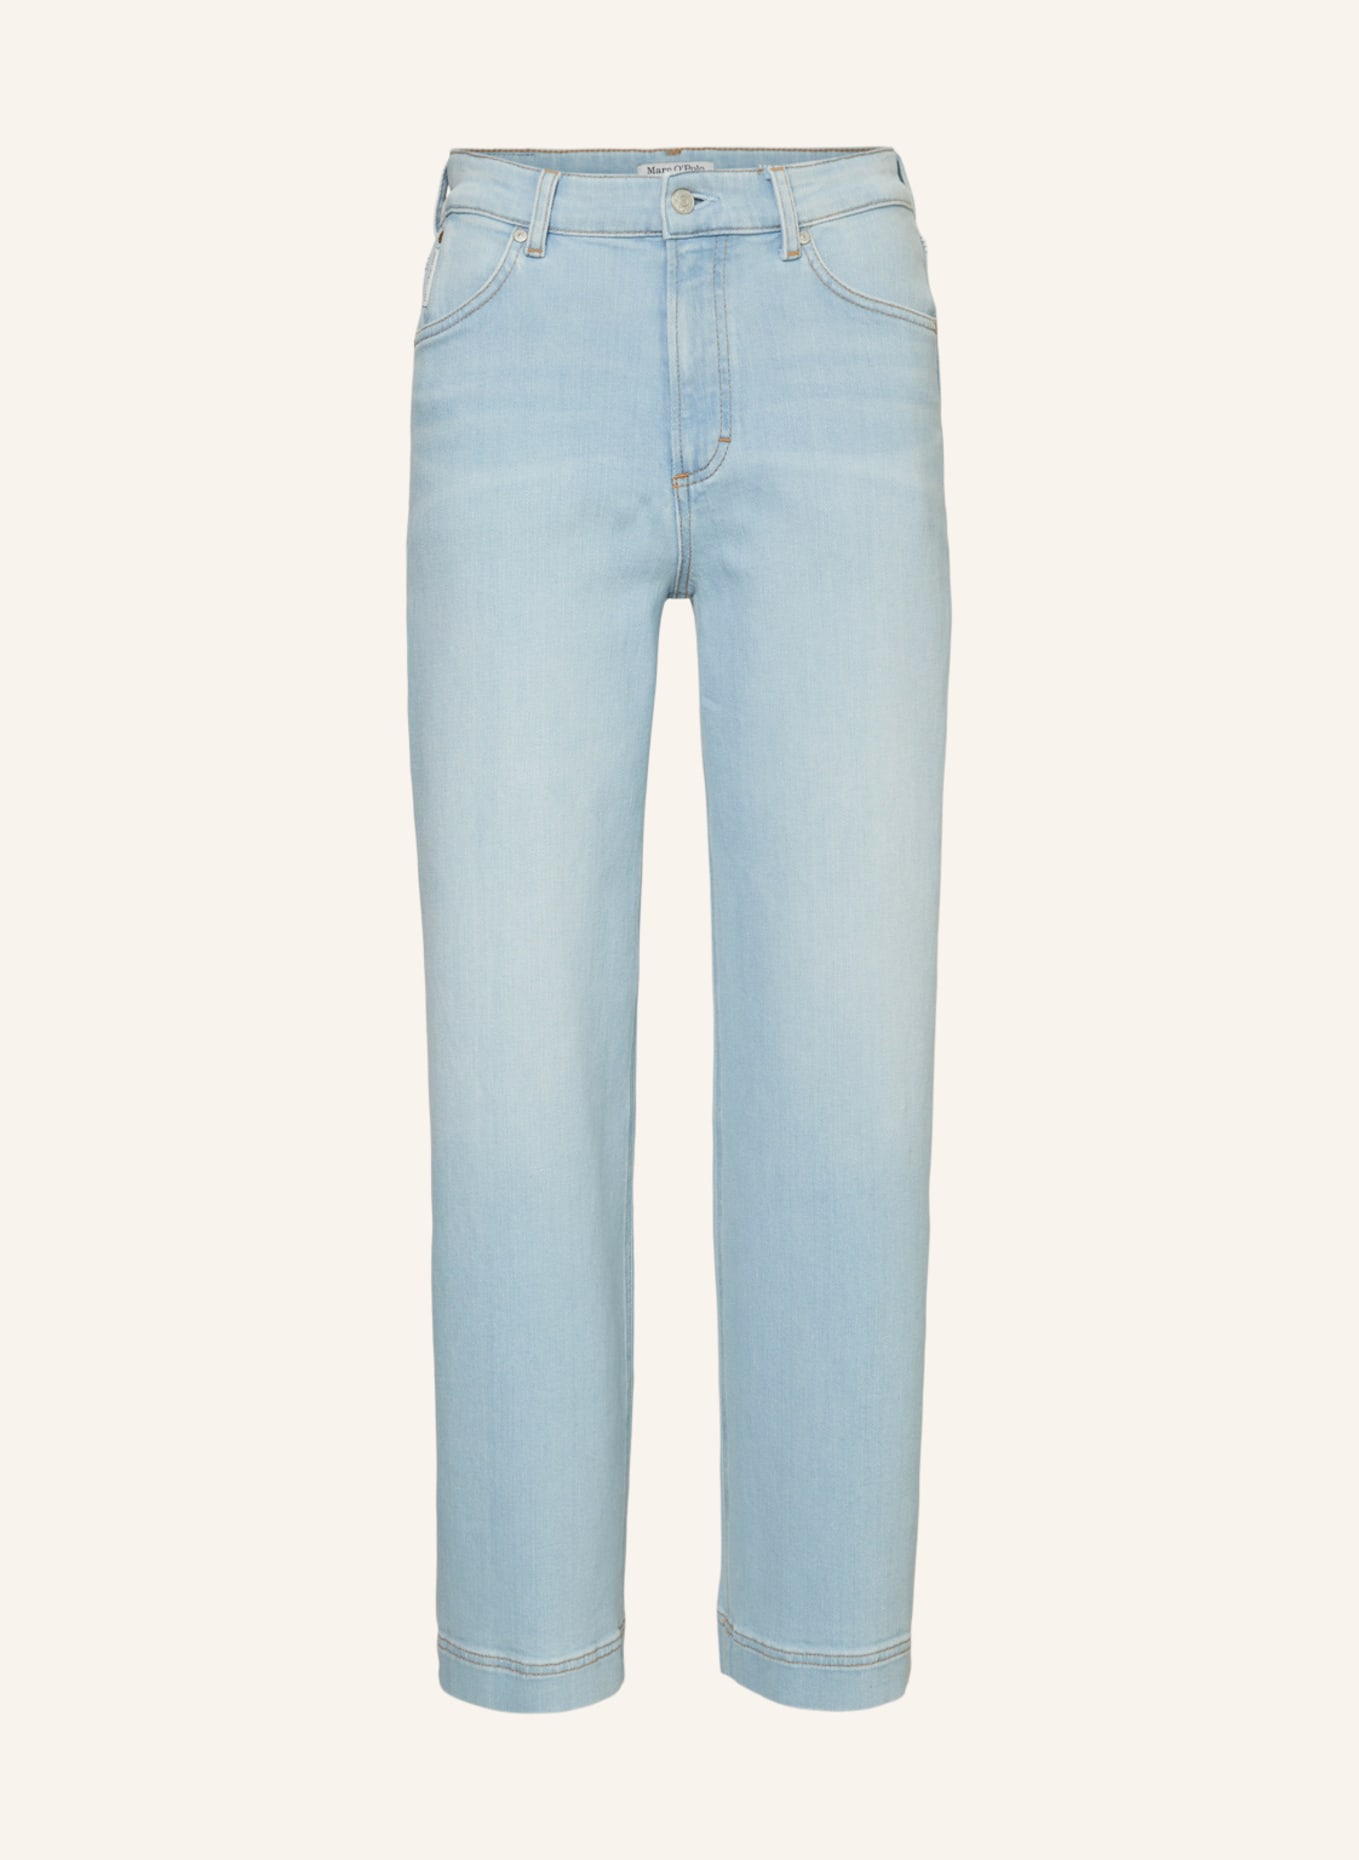 Marc O'Polo DENIM Jeans Modell TOMMA, Farbe: BLAU (Bild 1)